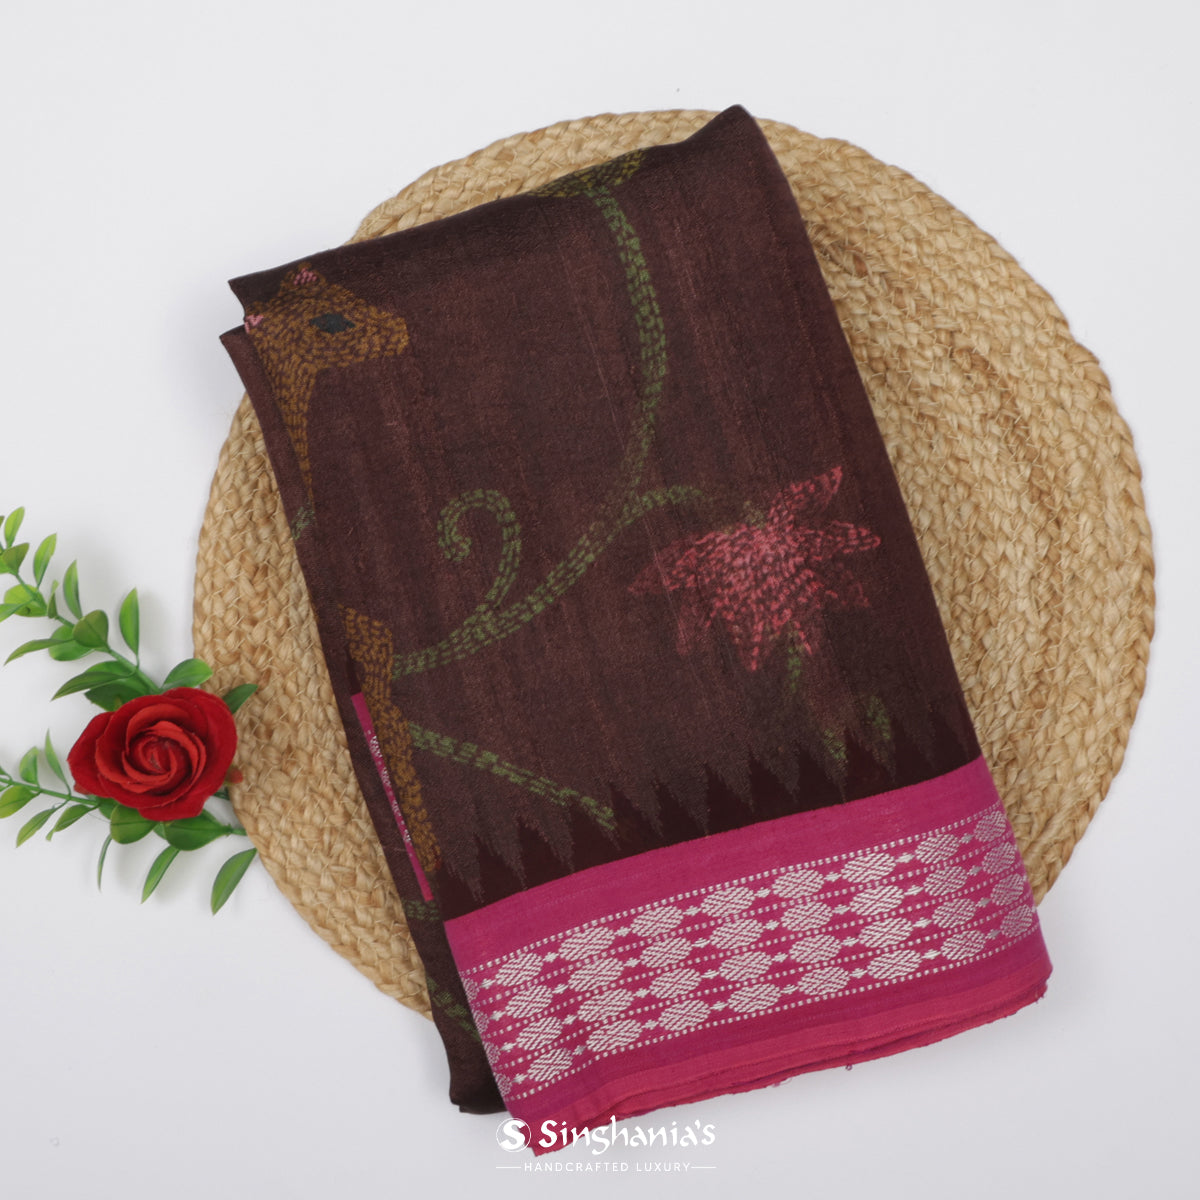 Brown Coffee Dupion Silk Saree With Printed Flora-Fauna Pattern